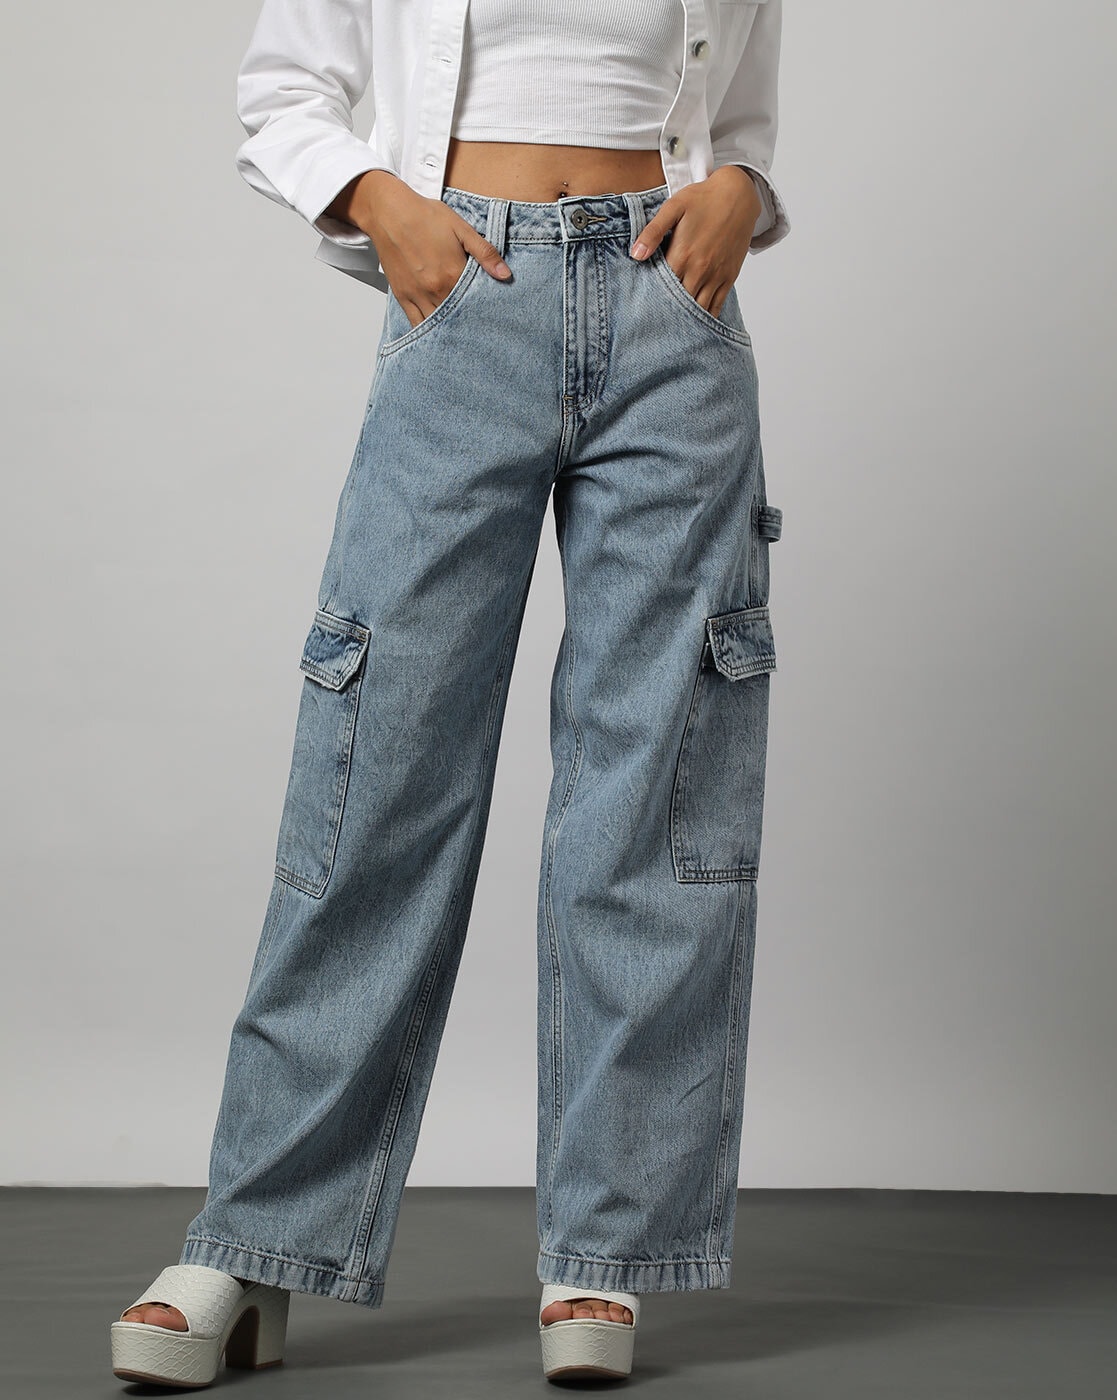 Jeans combat ladies trousers for sale at tradefair market - Nigeria Online  B2B Wholesale Marketplace